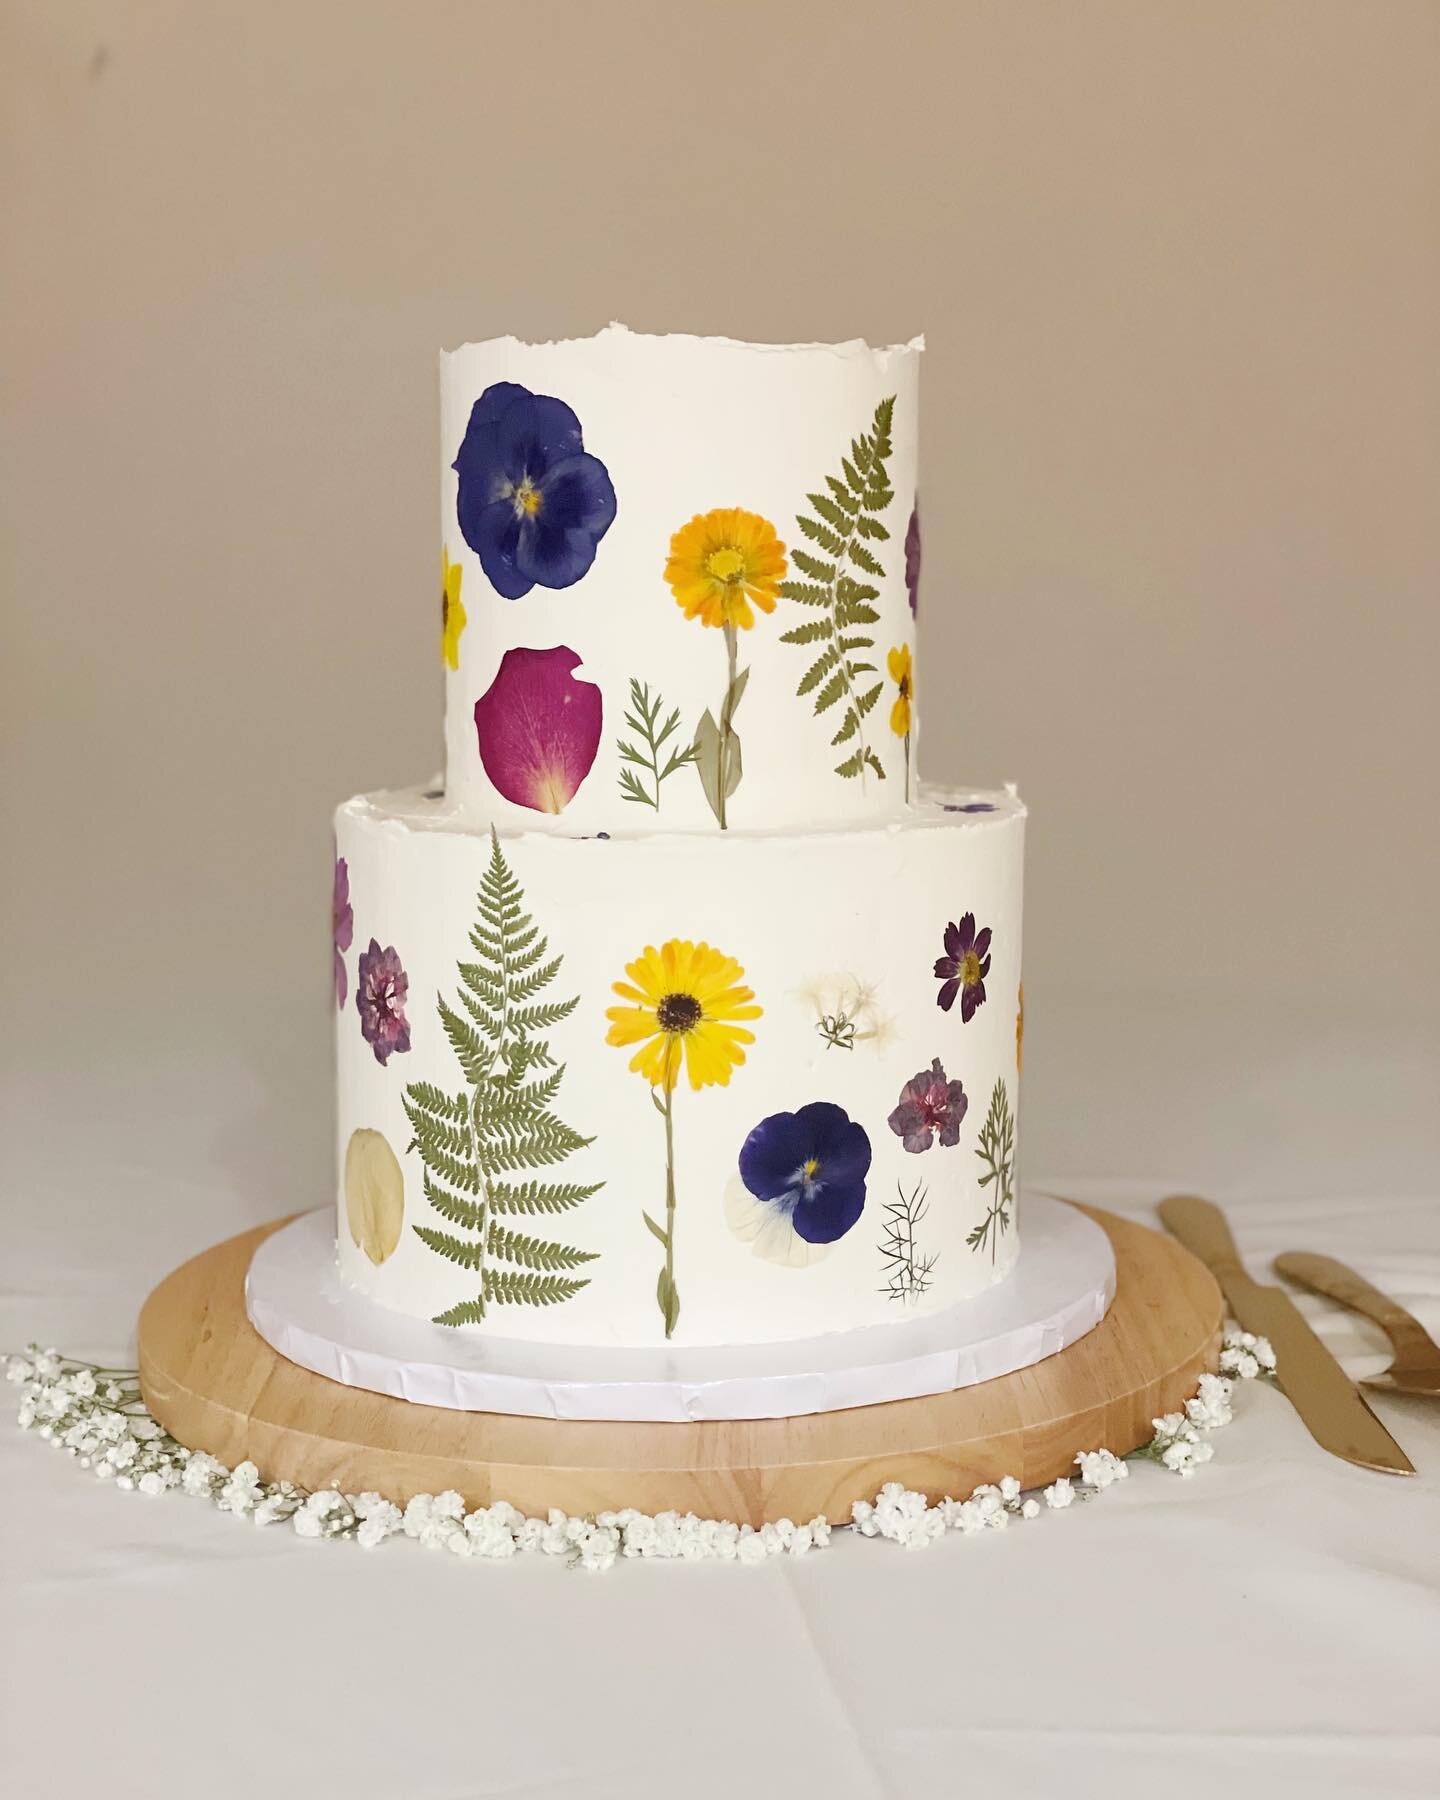 Pressed Flower Cake 

6: Strawberries + Cream
9: Almond 

#bluewillowbakery #tnwedding #pressedflowercake #leeuniversity #georgiaweddings #tennesseeweddings #weddingcakes